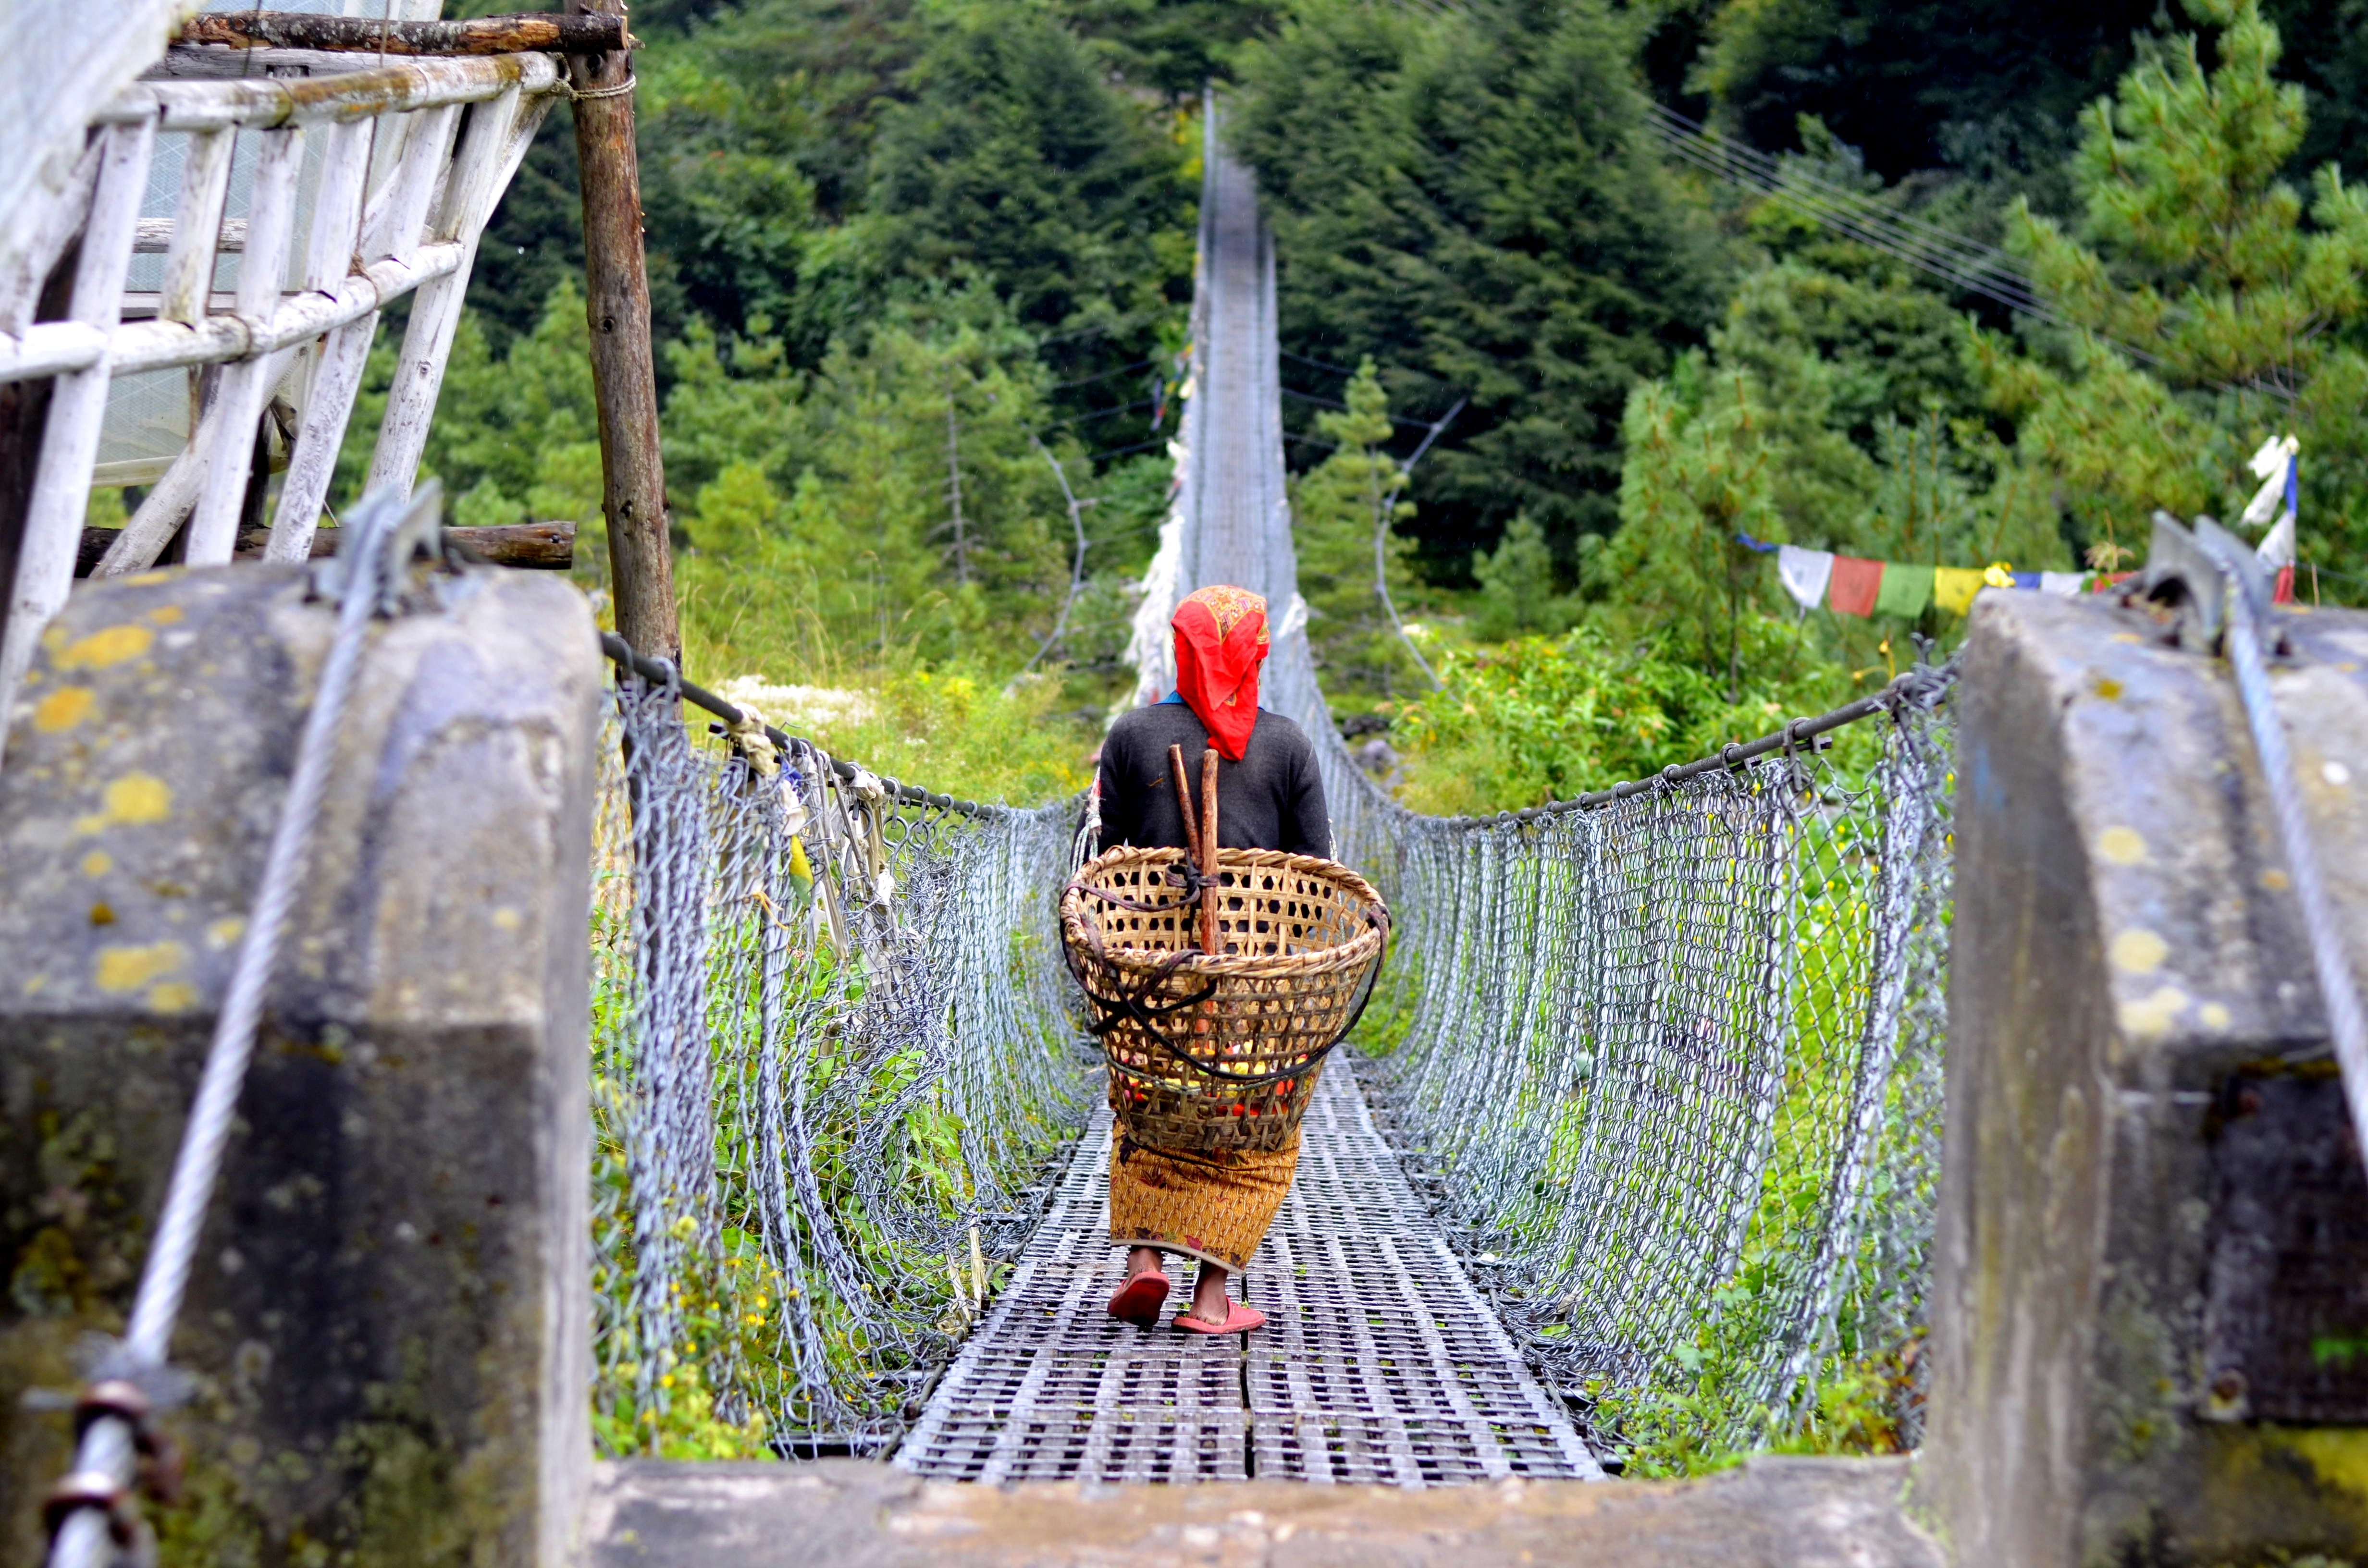 A woman carries a basket across a bridge